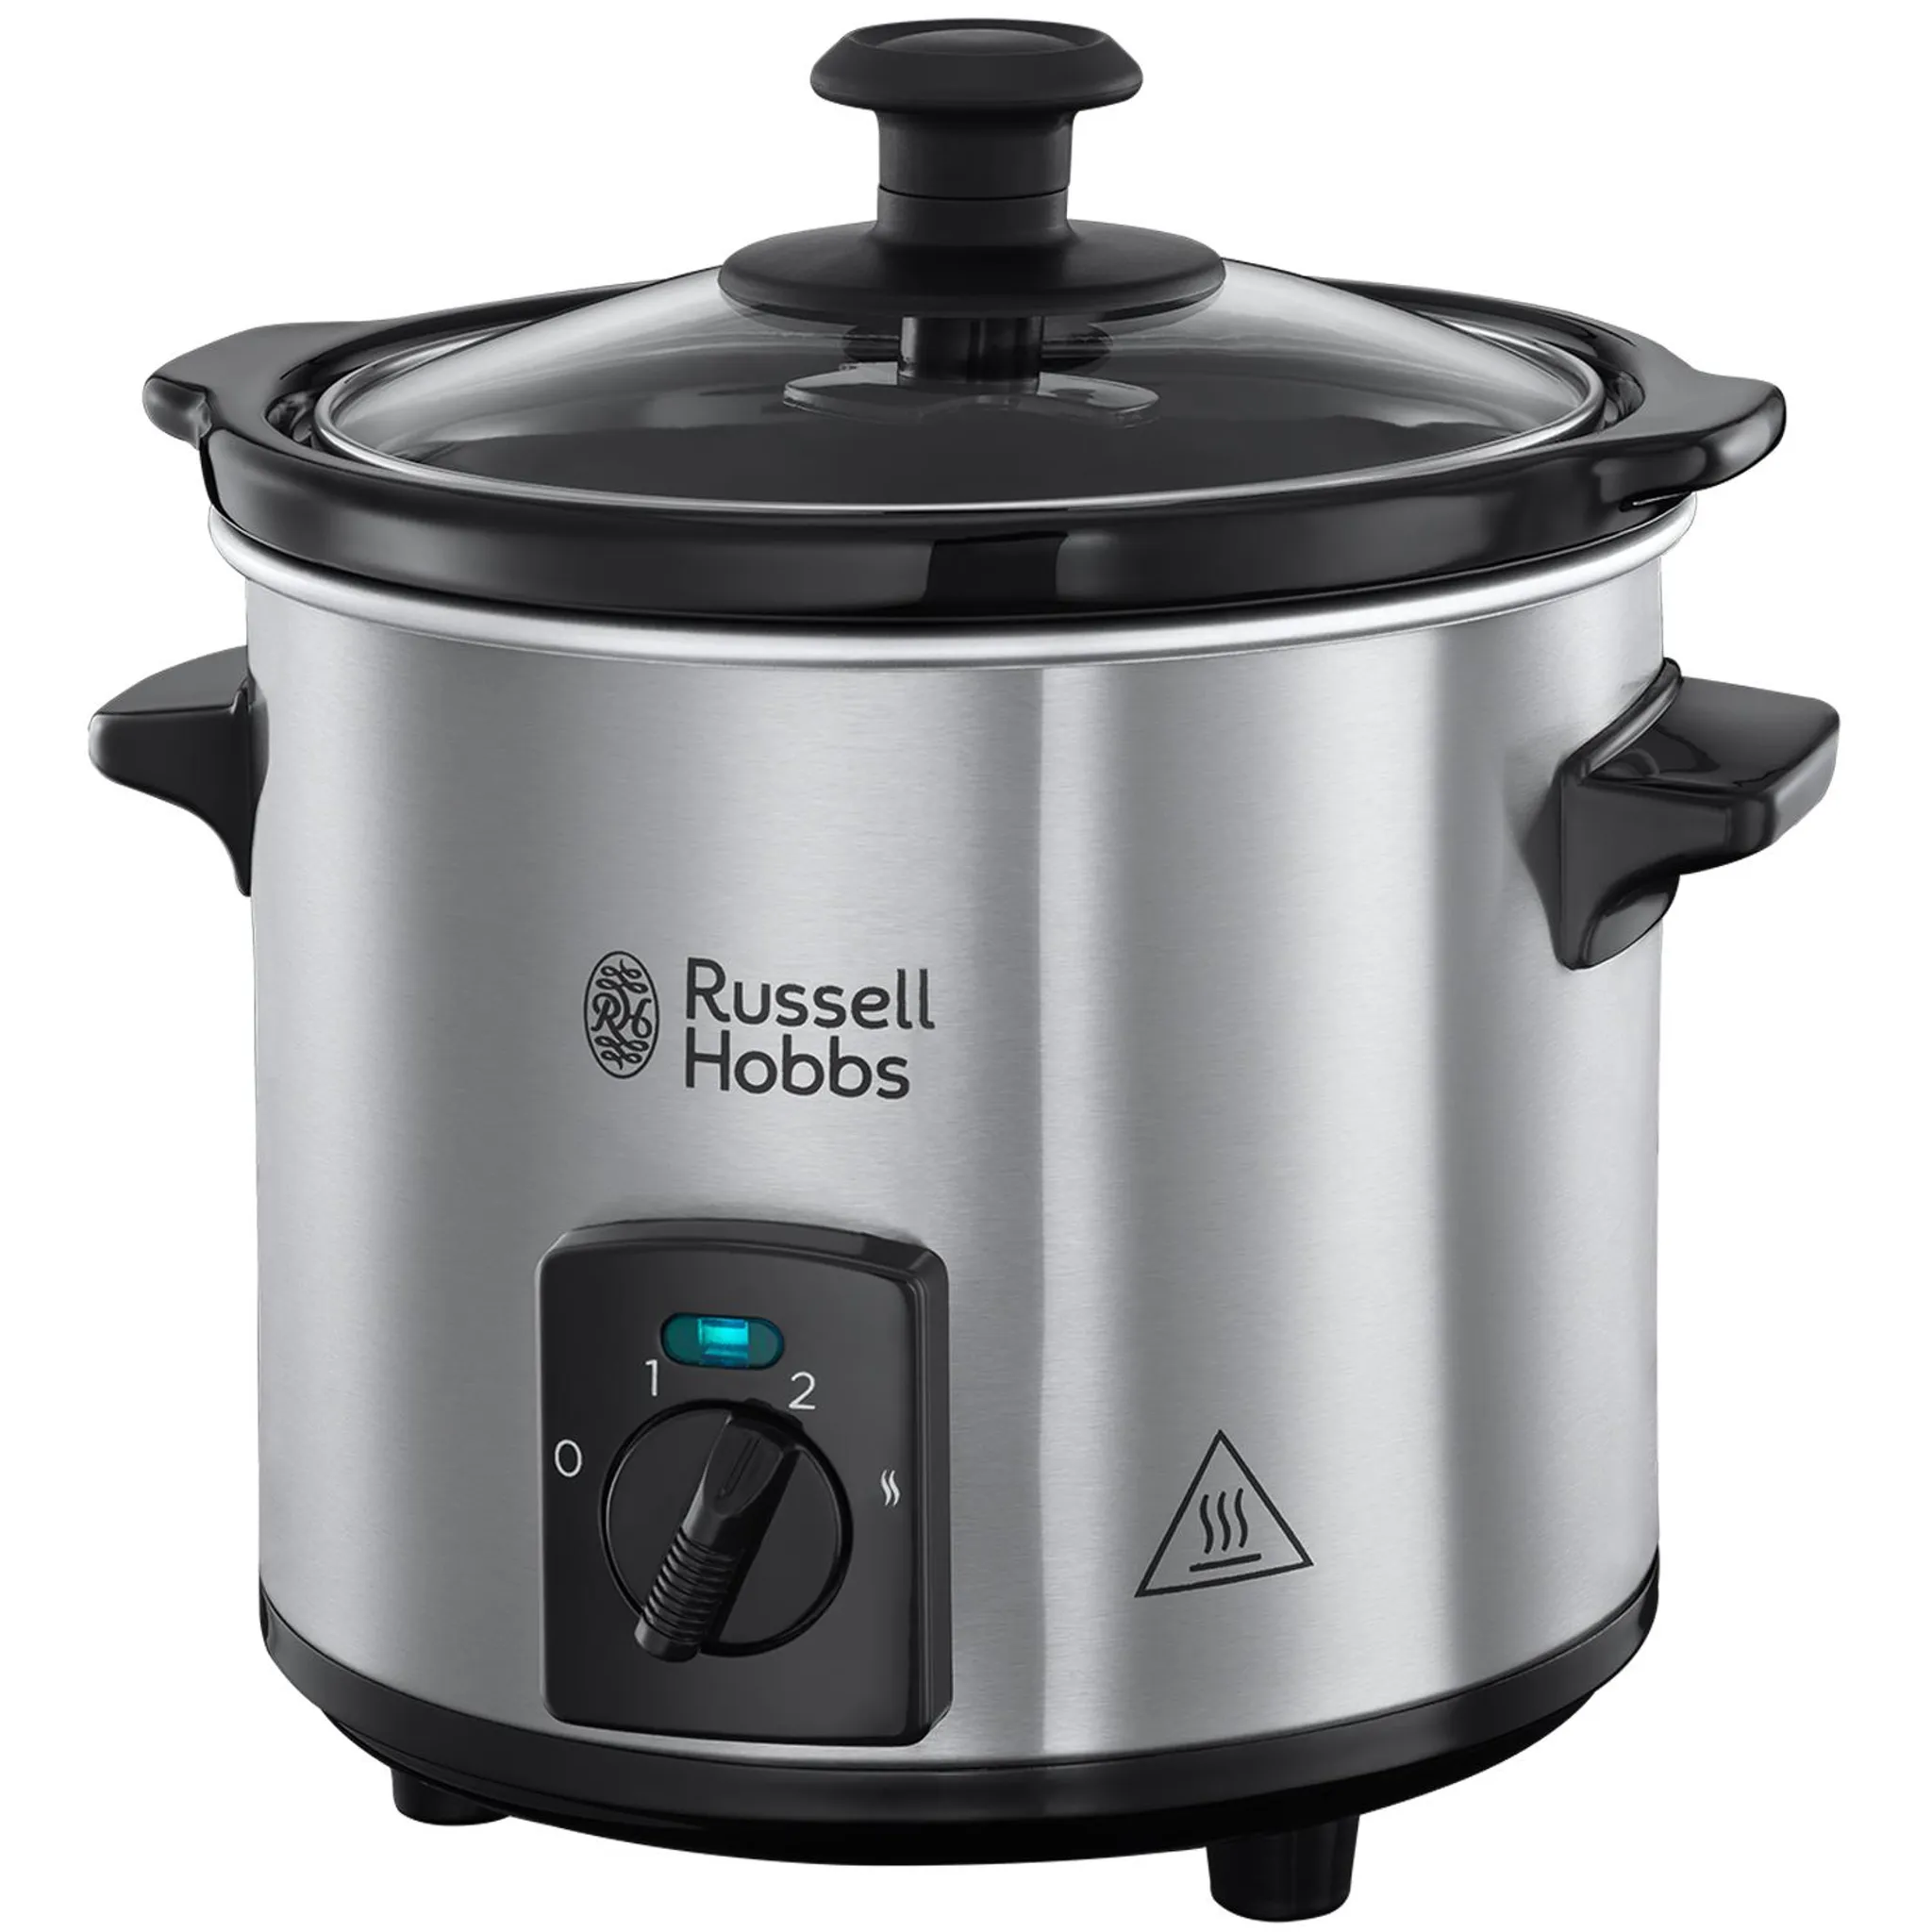 25570-56 Compact RUSSEL - Home Cooker HOBBS